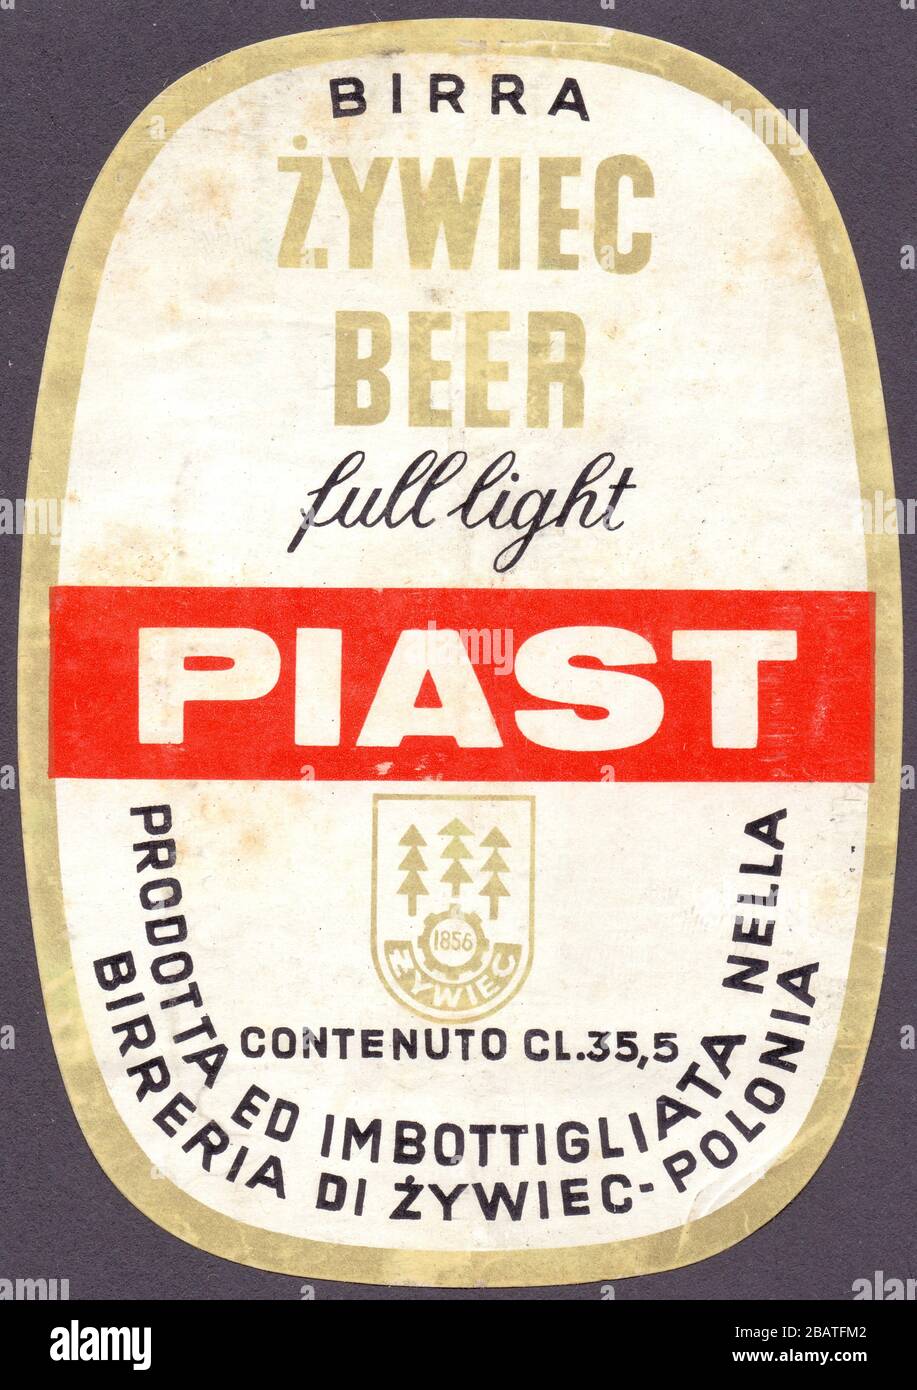 Etiquette ancienne. Pologne. Birra Zywiec Beer Full Light Piast Stockfoto